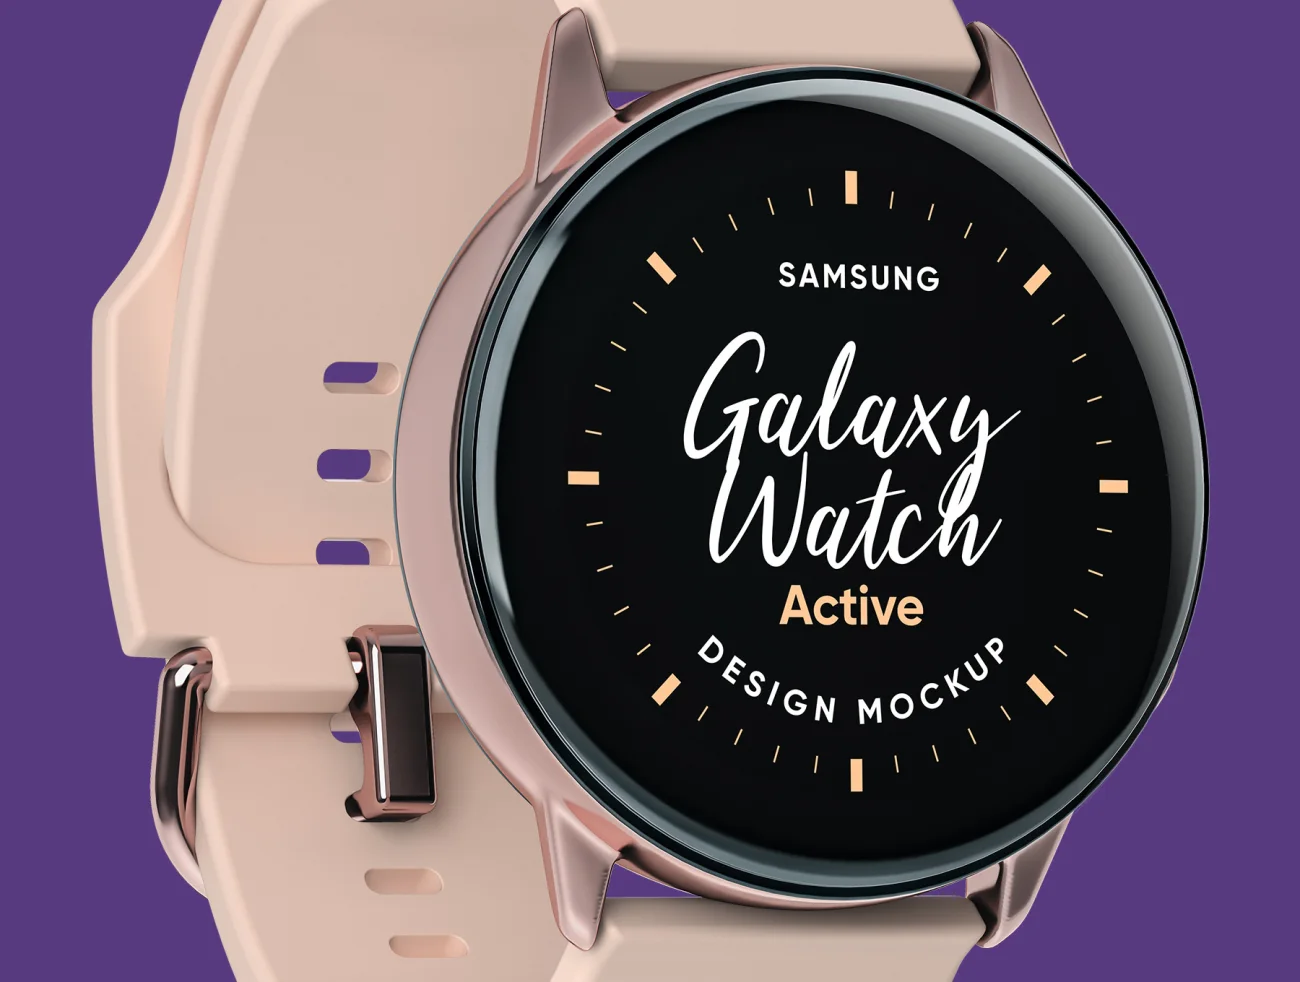 Samsung Galaxy Watch Design Mockup(part1) 三星Galaxy手表设计模型-第1部分插图5